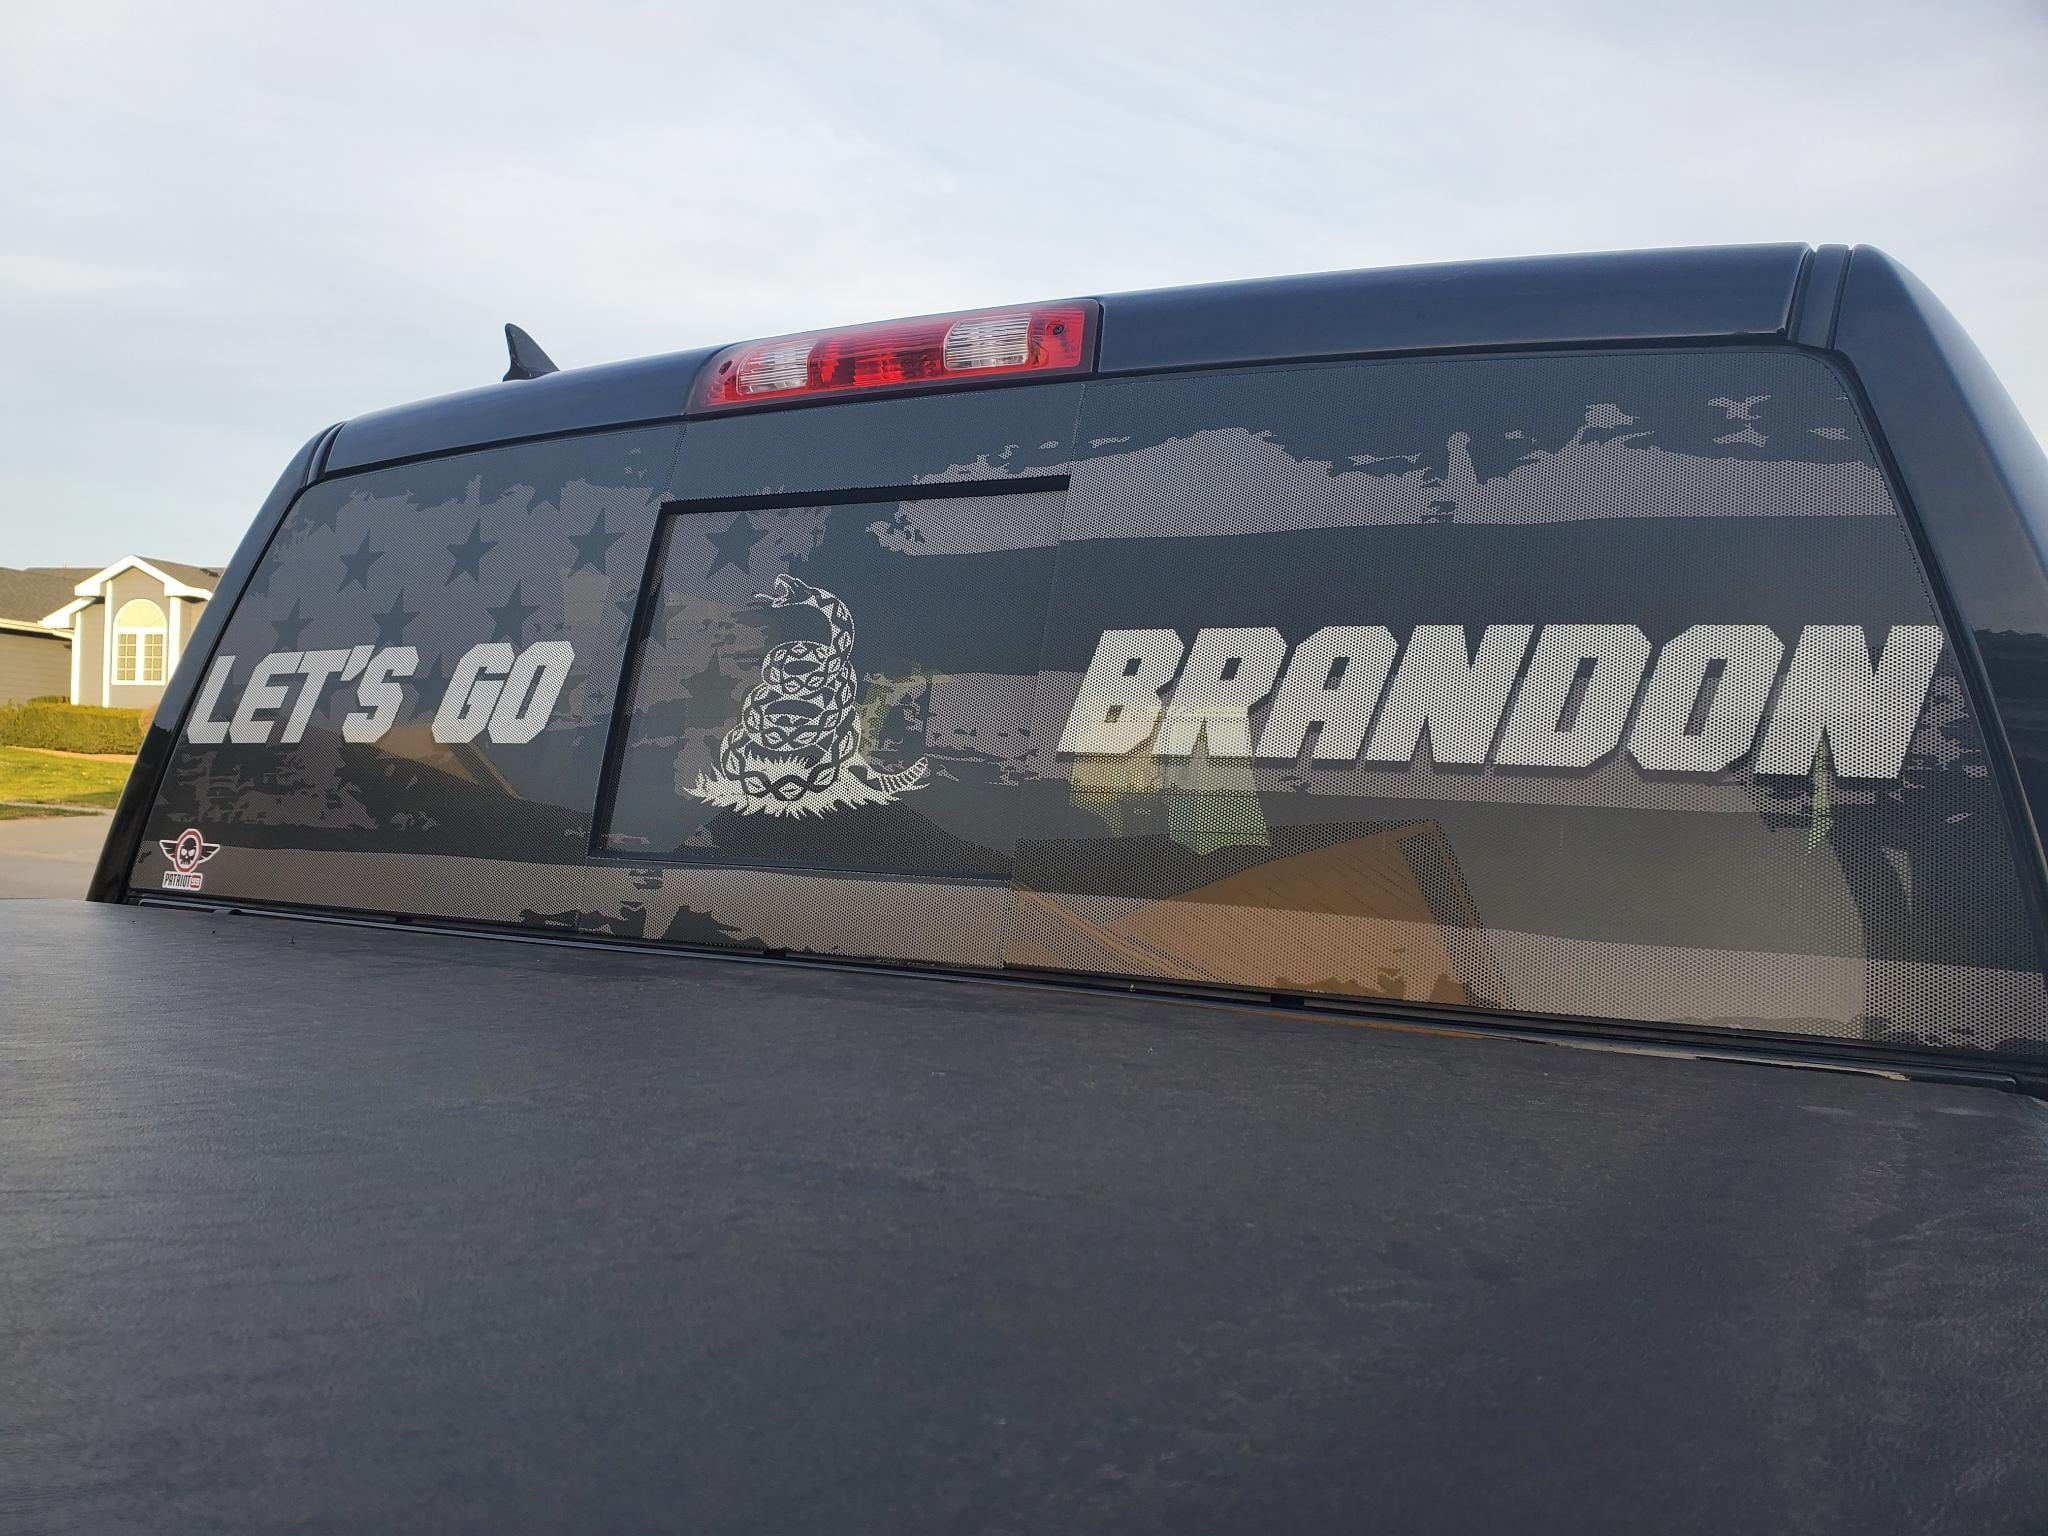 Let's Go Brandon - Lets Go Brandon - Sticker